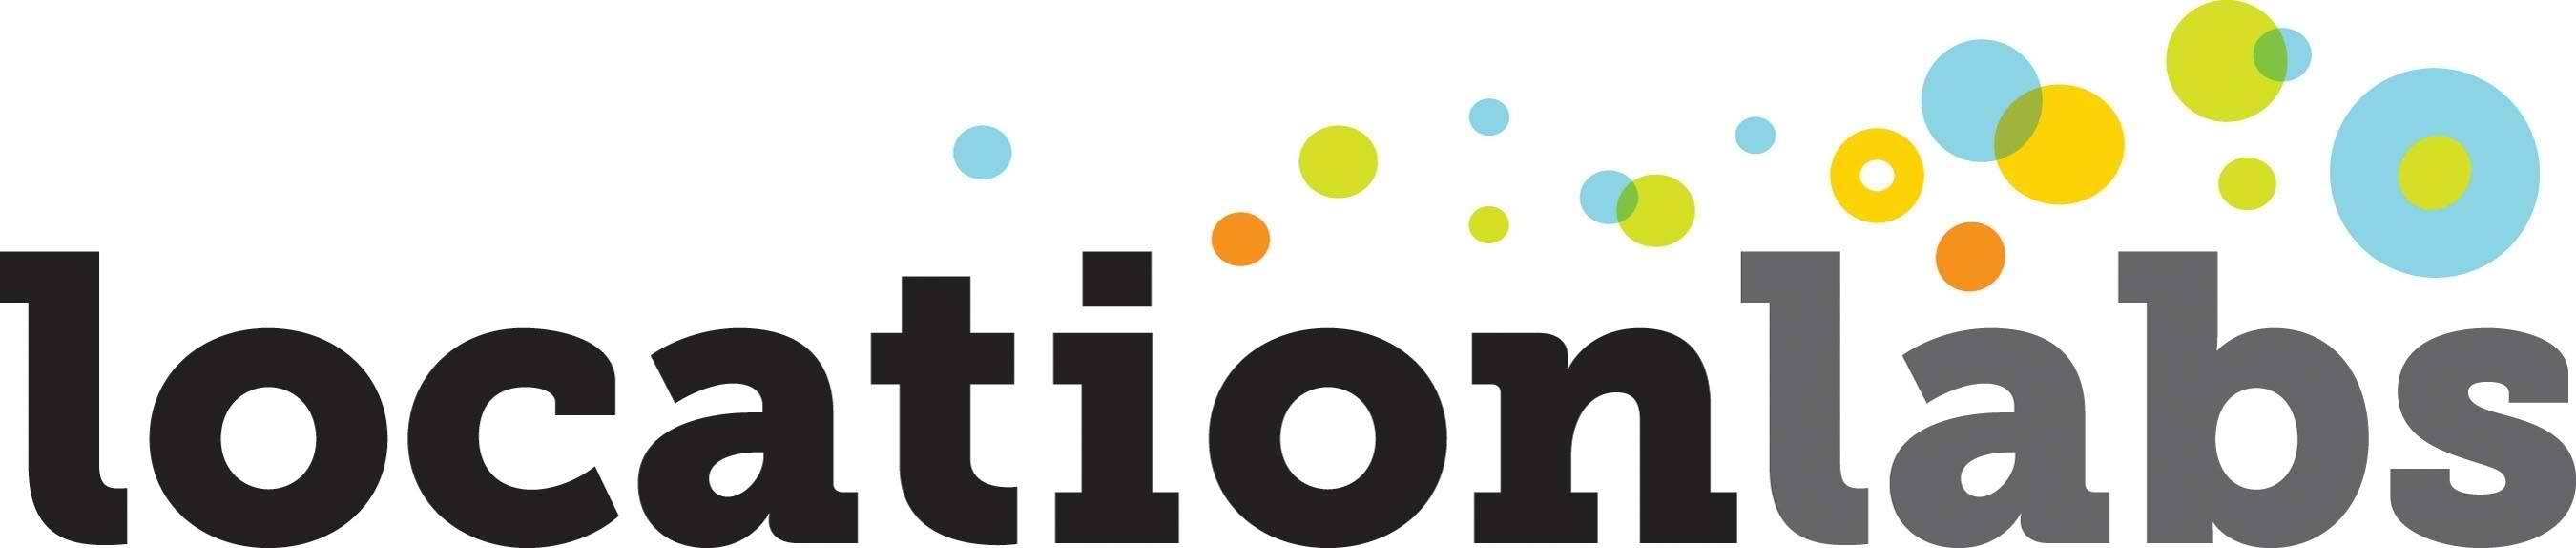 Safely / Location Labs Company Logo